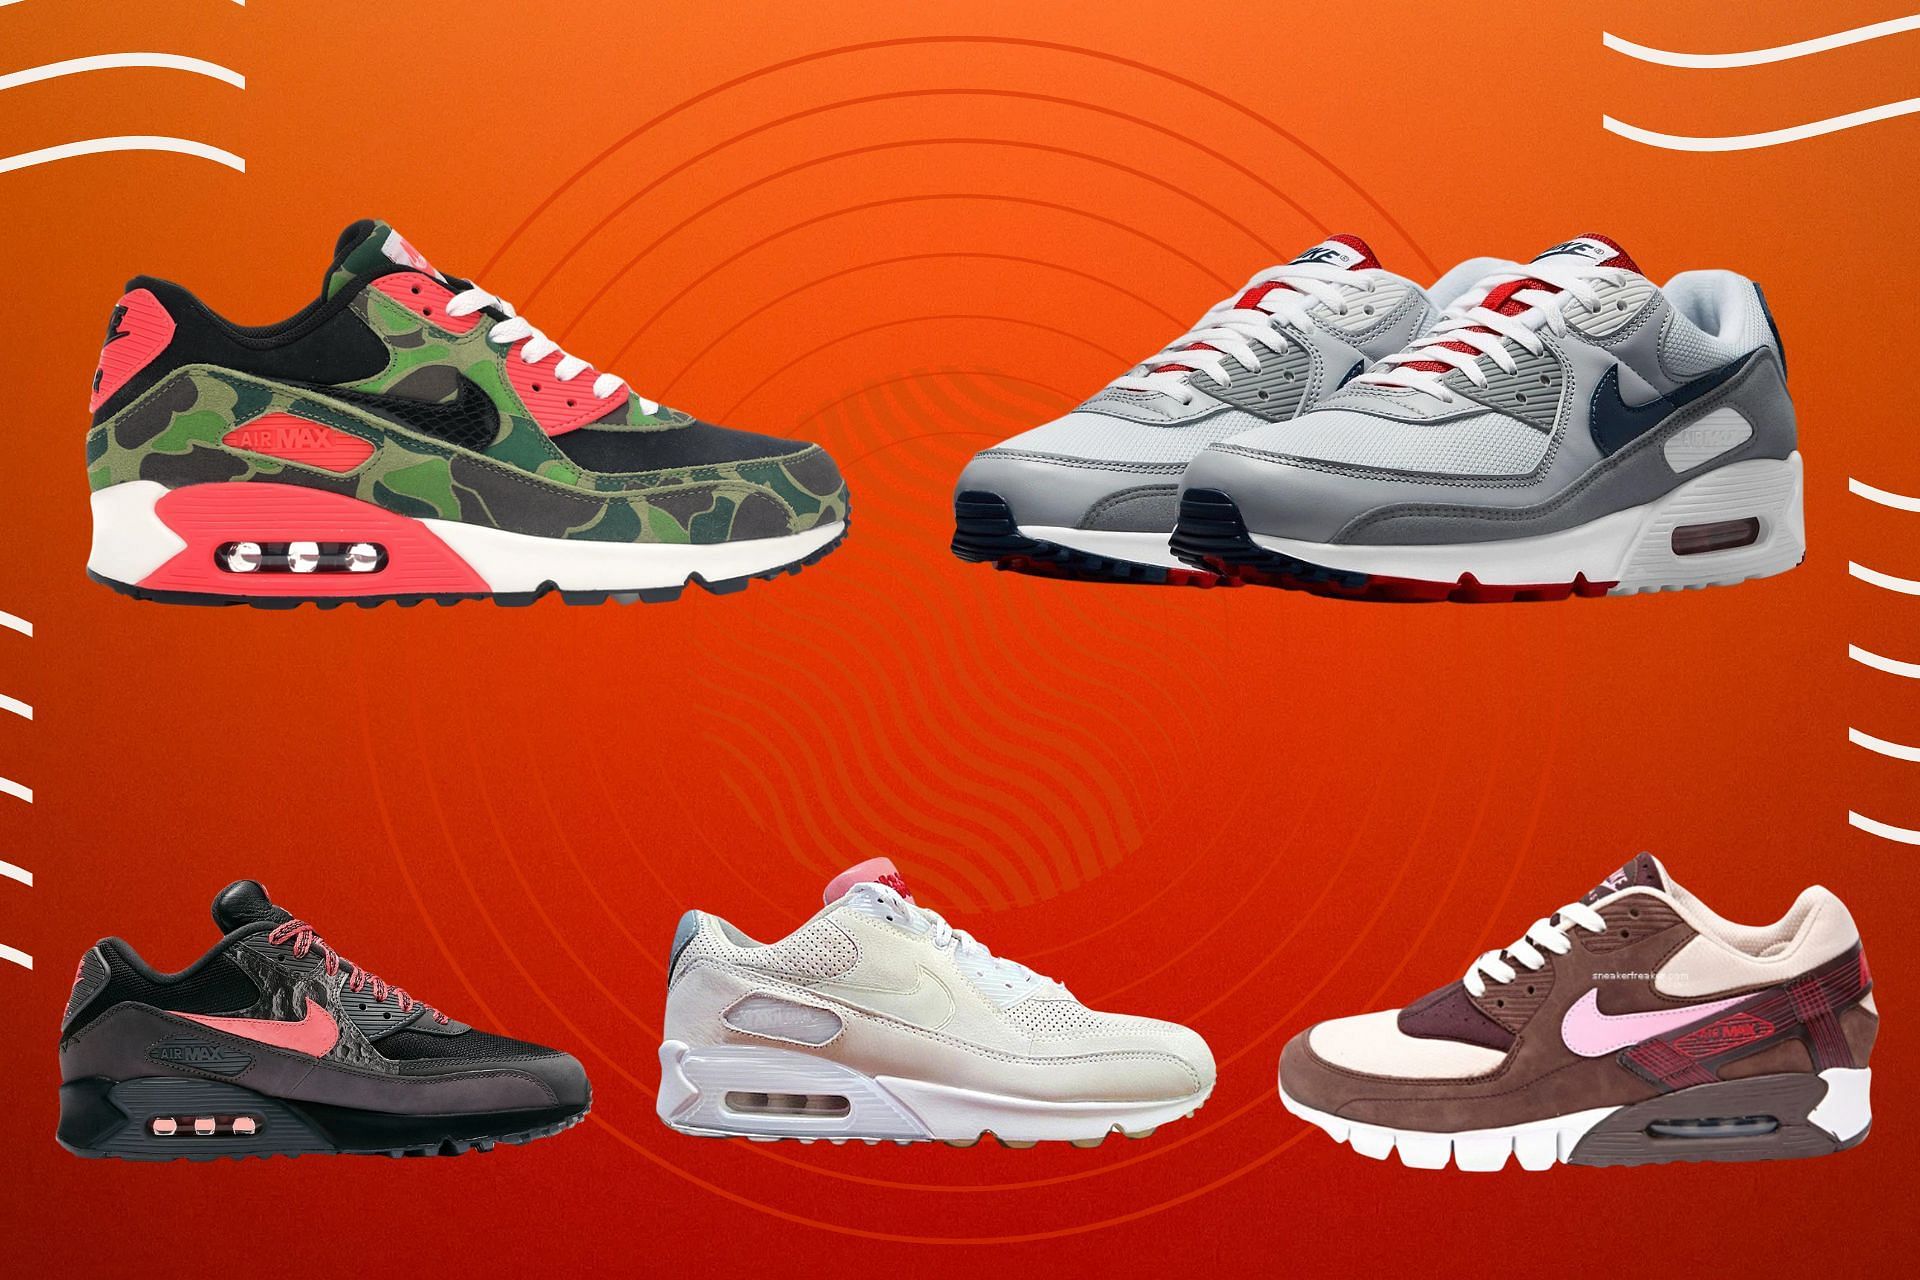 Top 10 NikeID Air Max 90 Designs  Sneakers fashion, Nike shoes